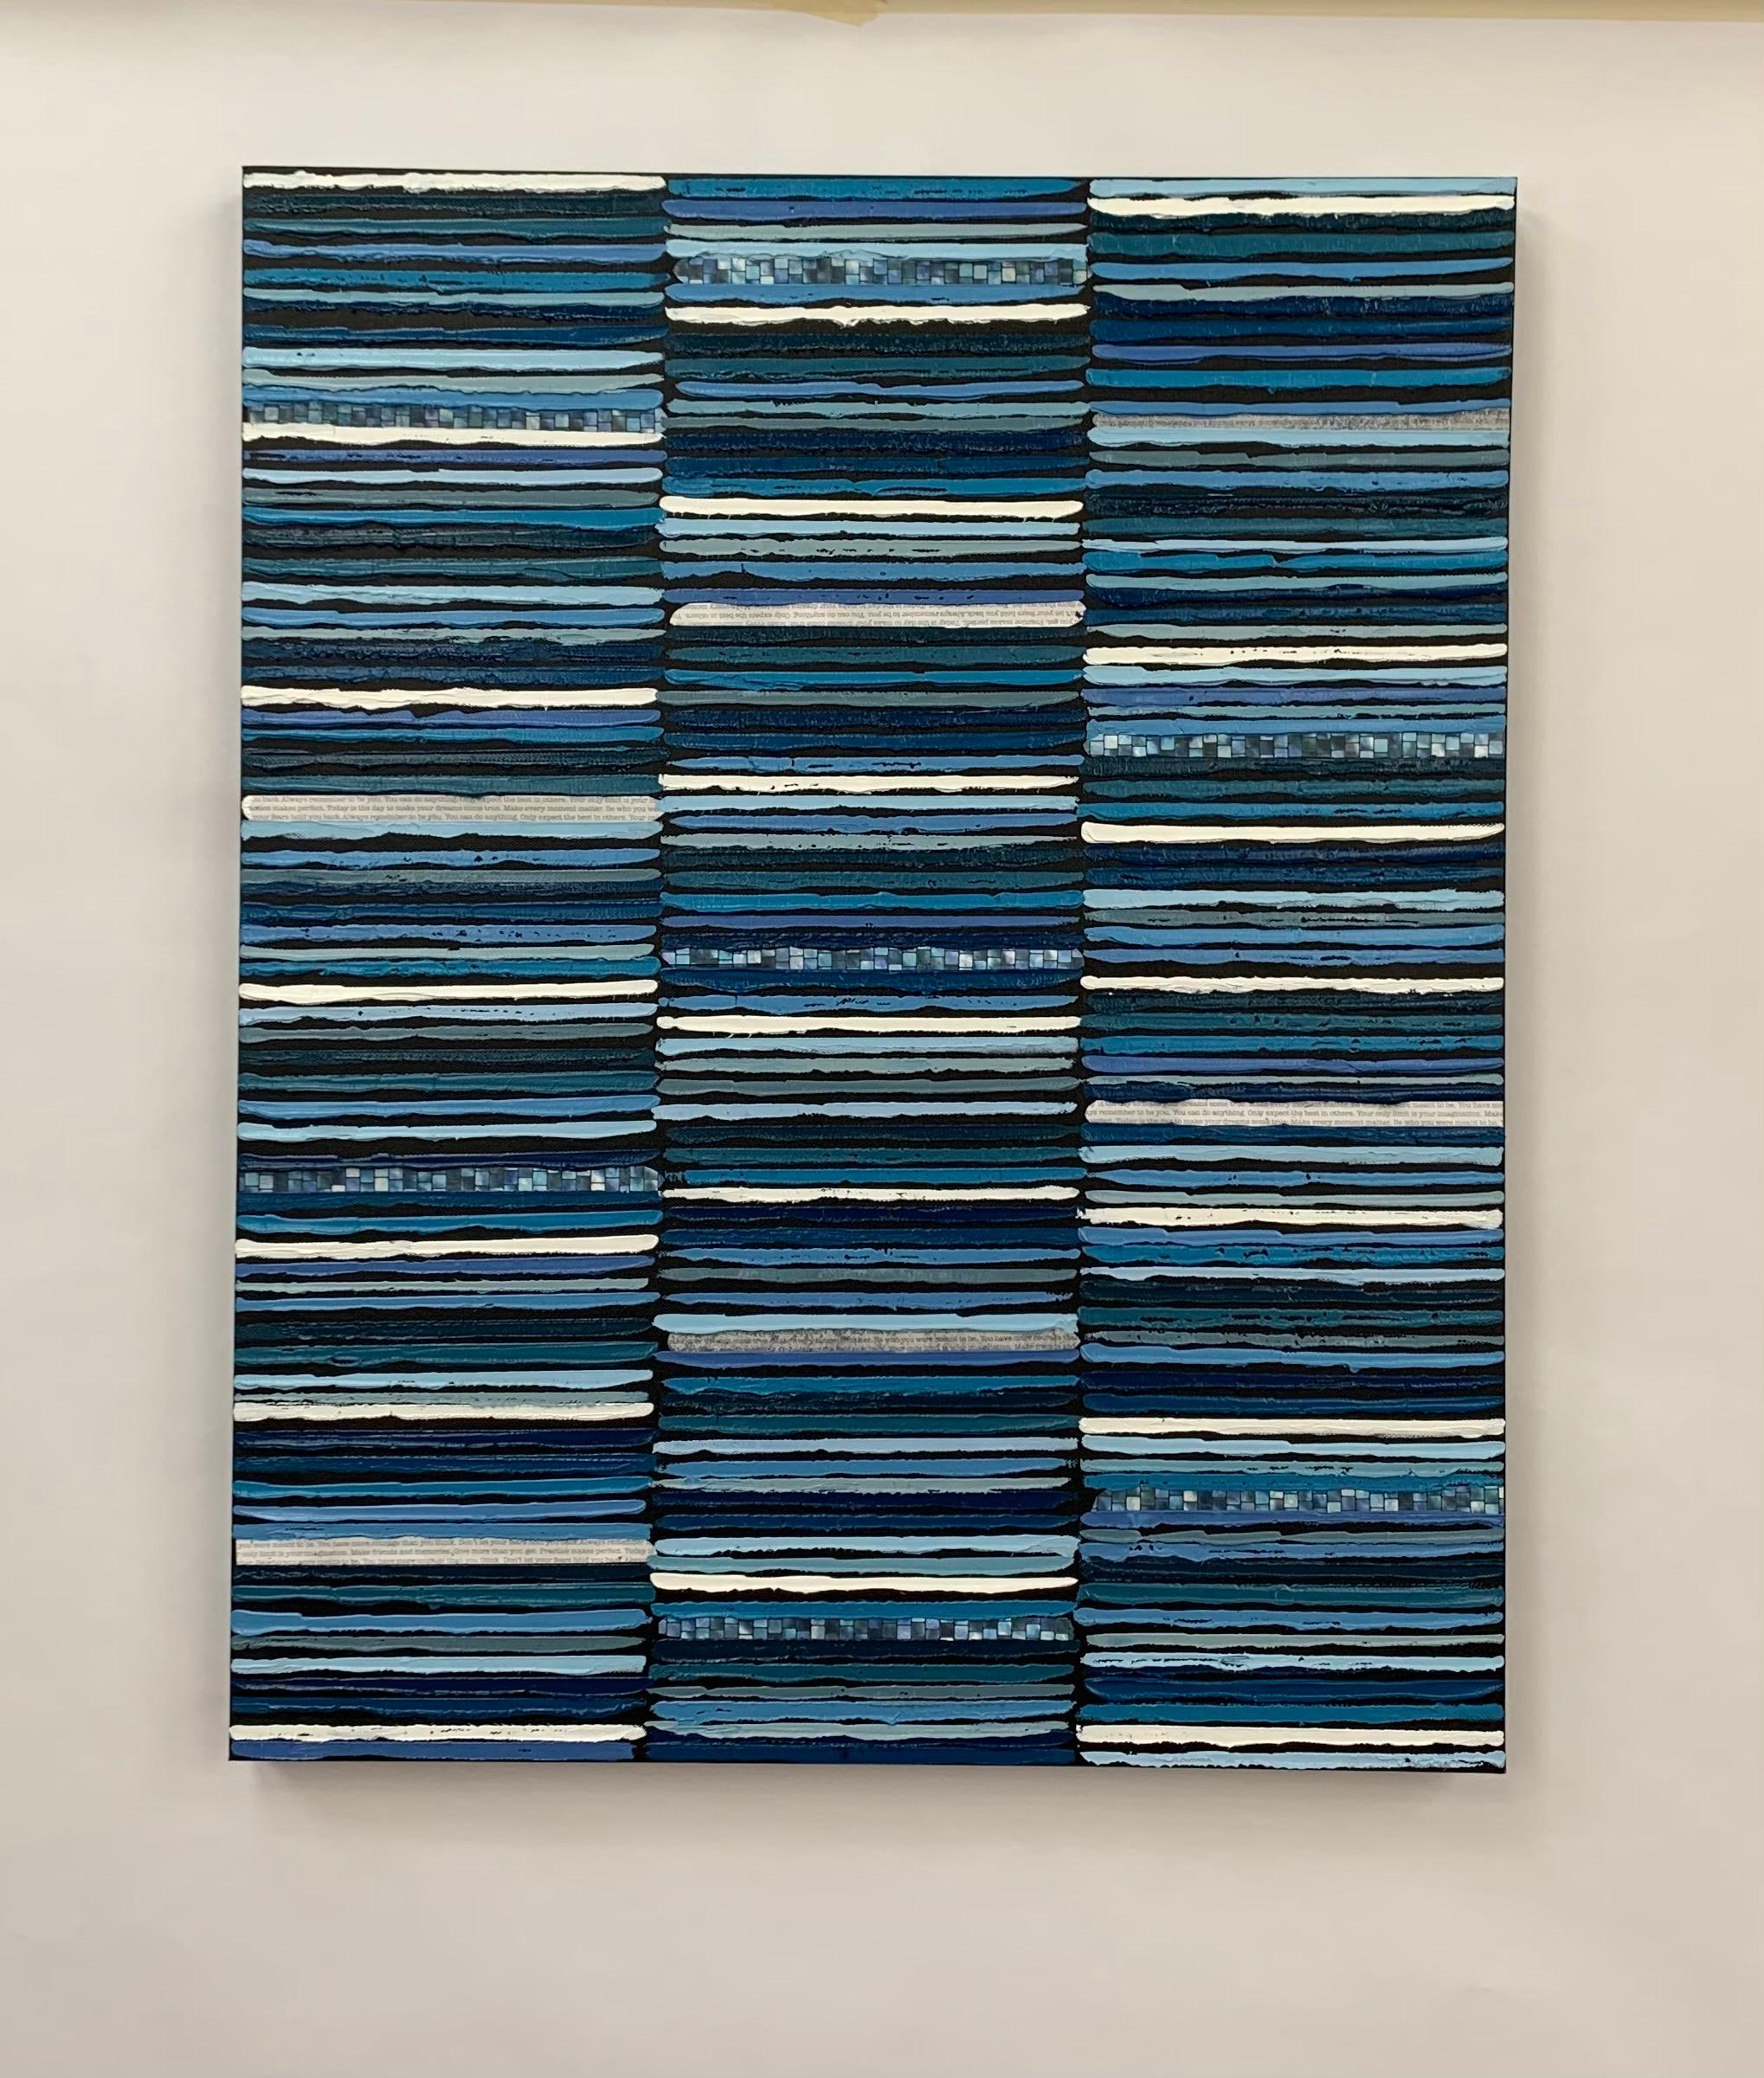 <p>Artist Comments<br />Part of artist Janet Hamilton's signature series exploring geometric lines and color grids. 